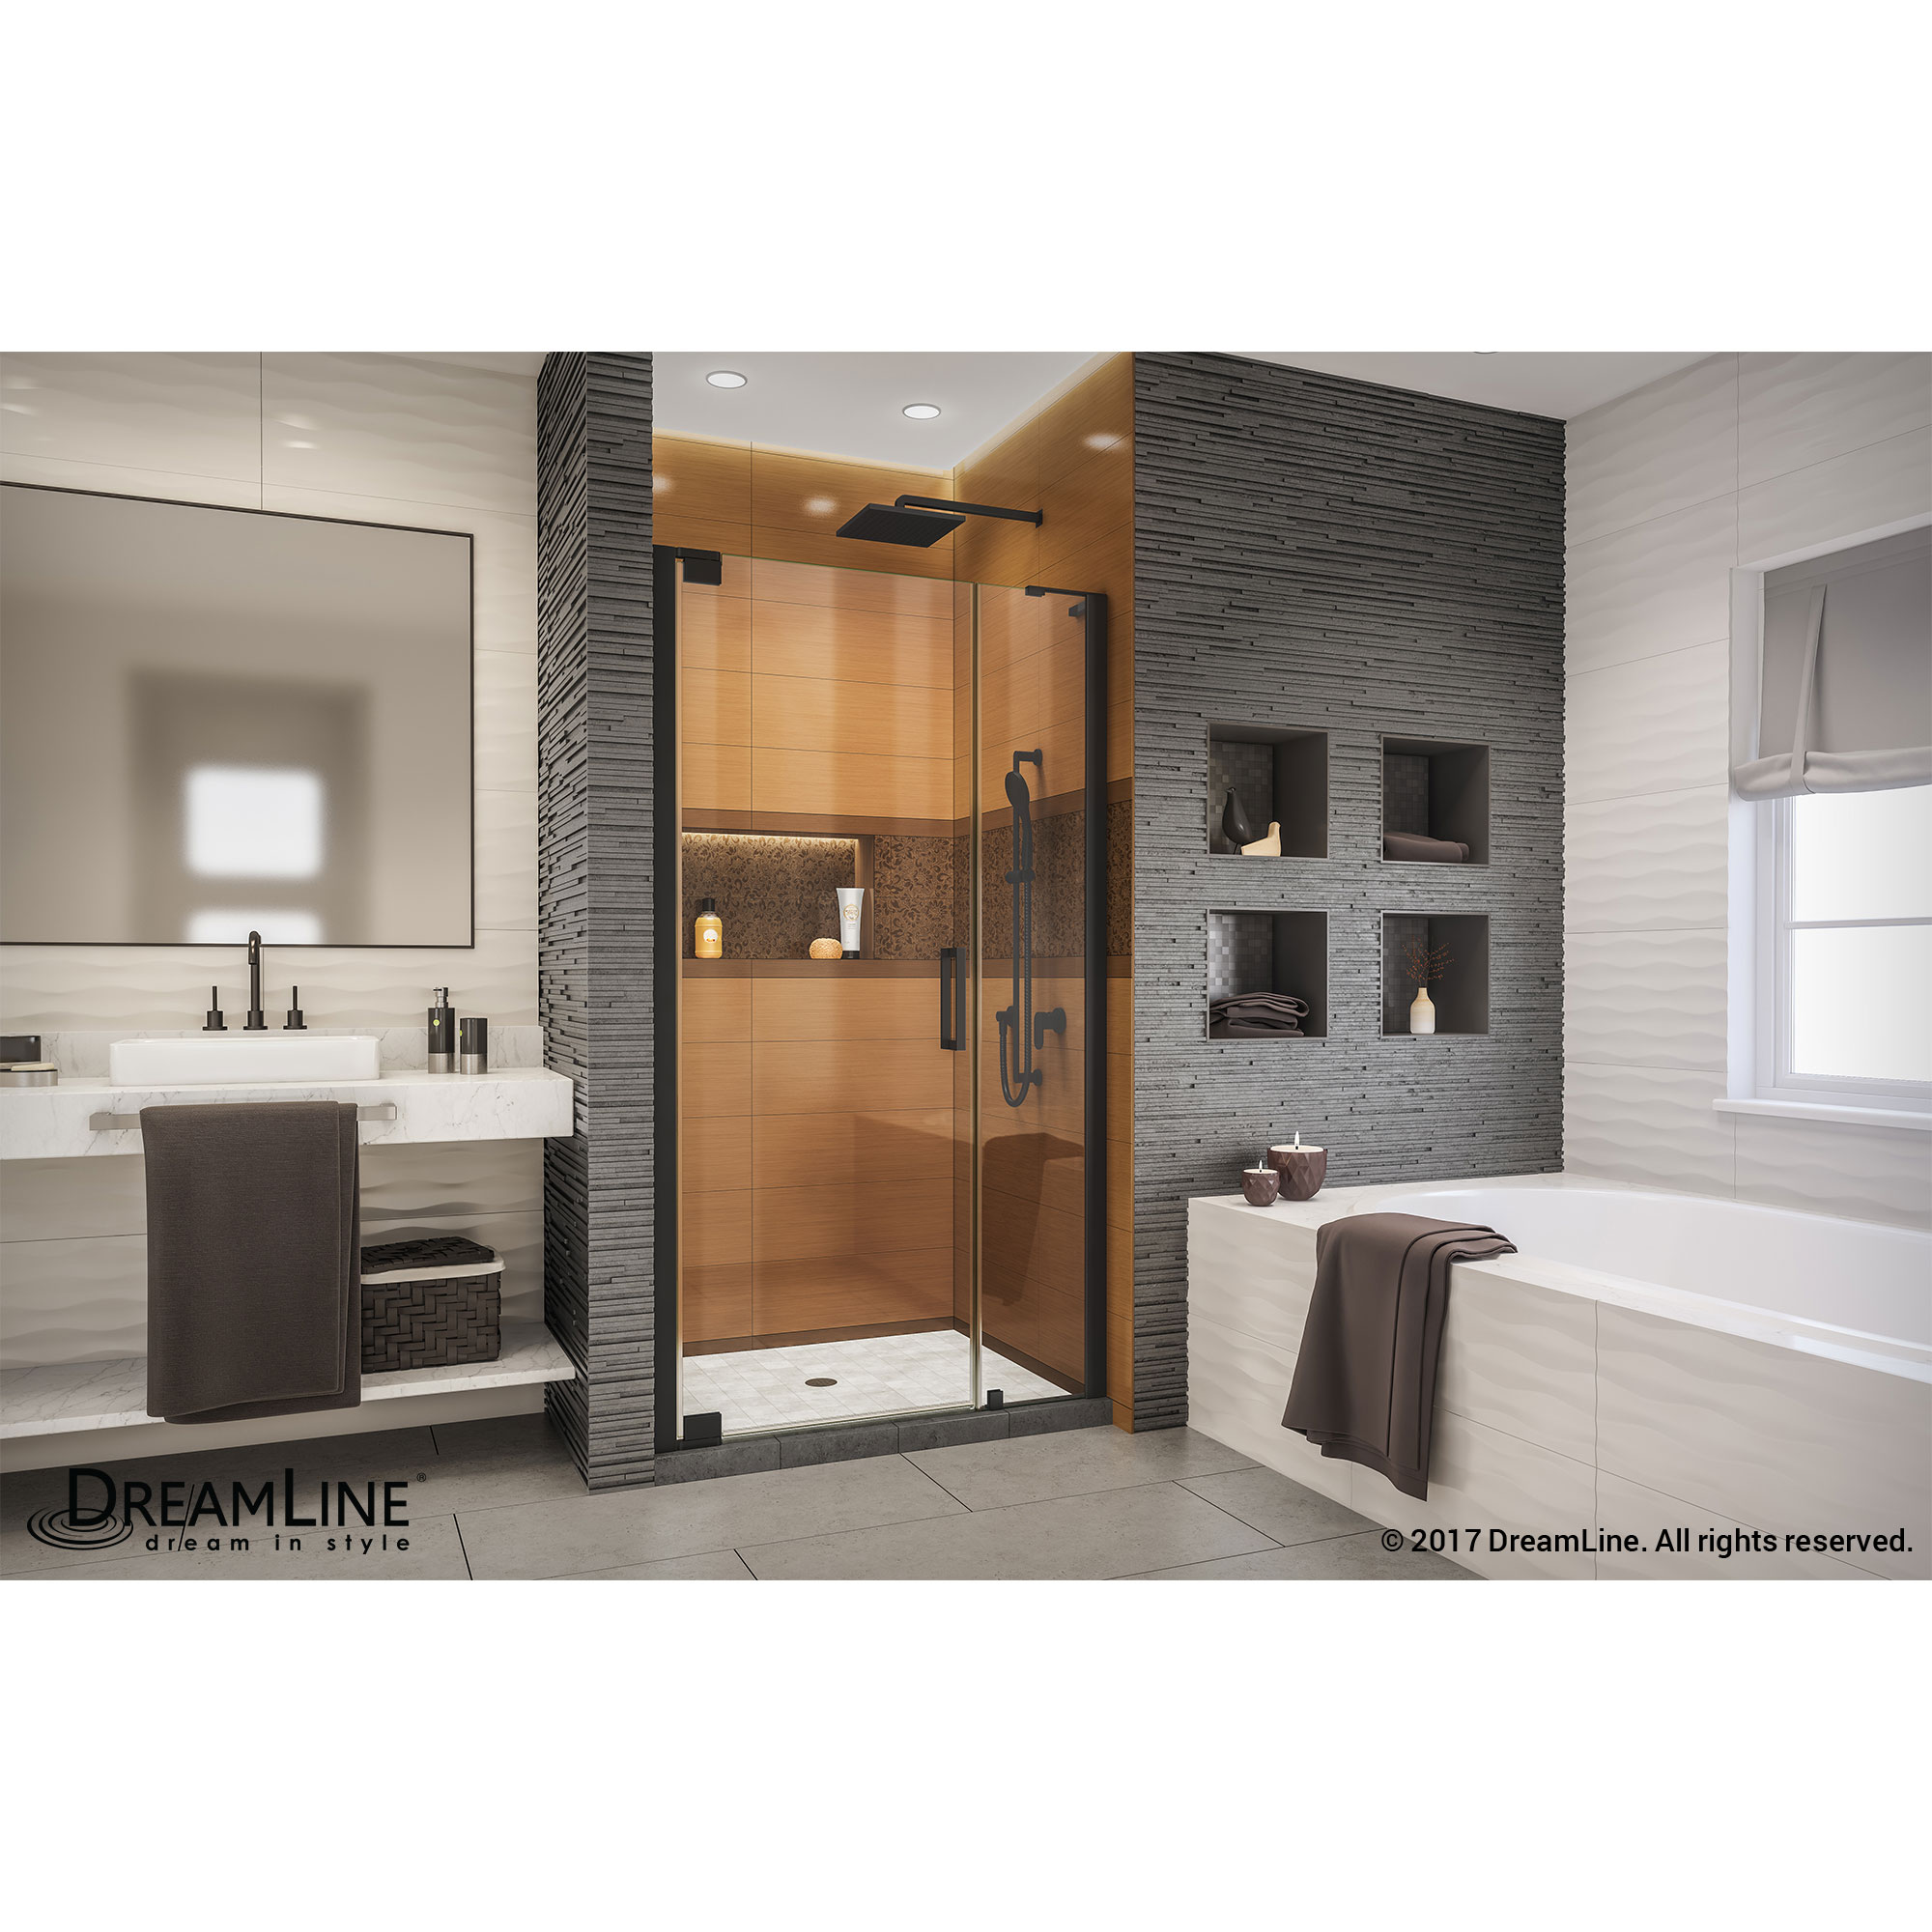 DreamLine Elegance-LS 44 - 46 in. W x 72 in. H Frameless Pivot Shower Door in Satin Black